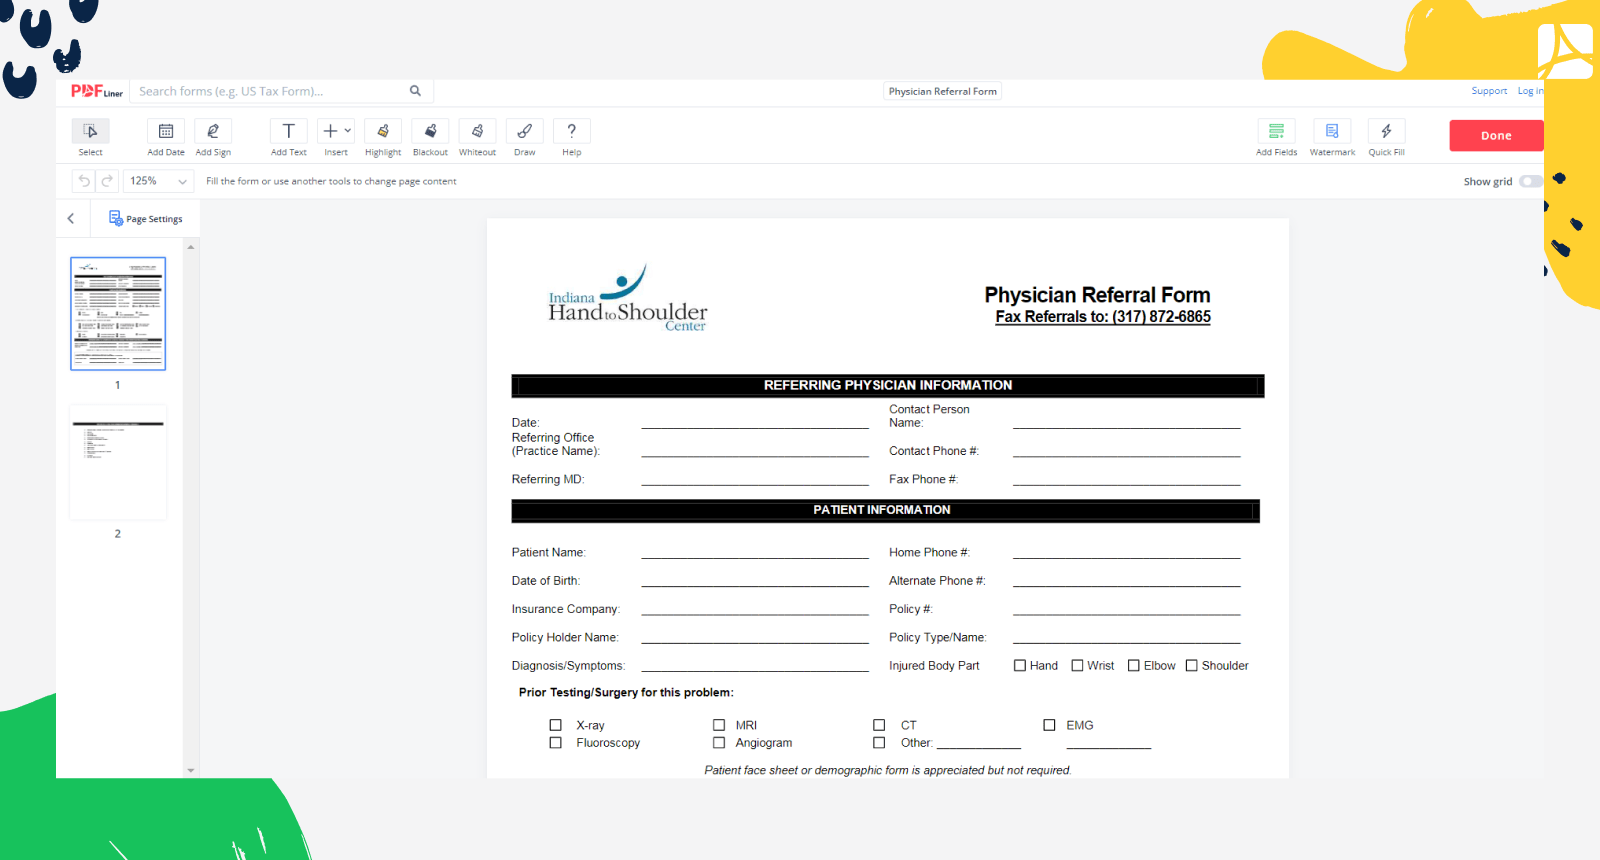 Physician Referral Form on PDFLiner